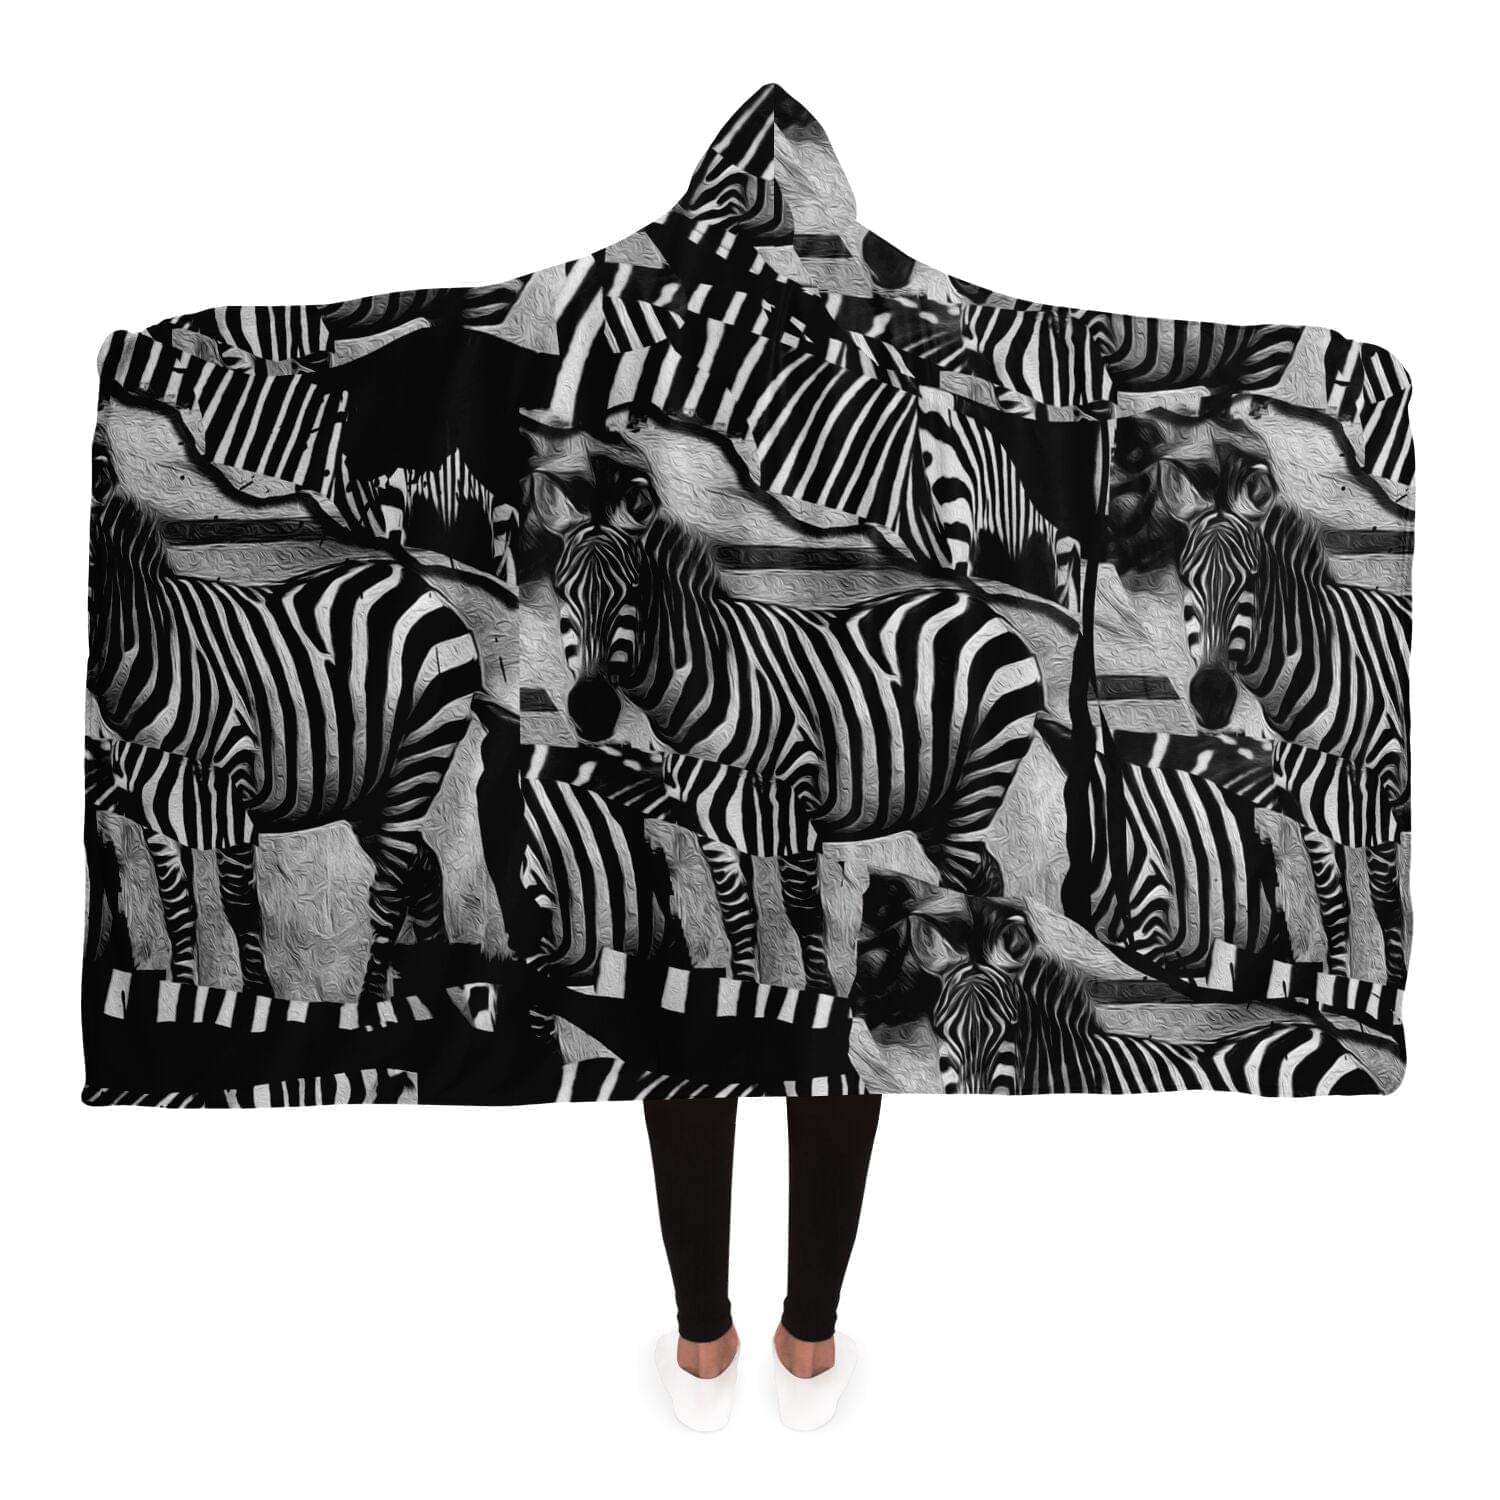 Zebra artwork Hooded Blanket Gift Idea HOO-DESIGN.SHOP